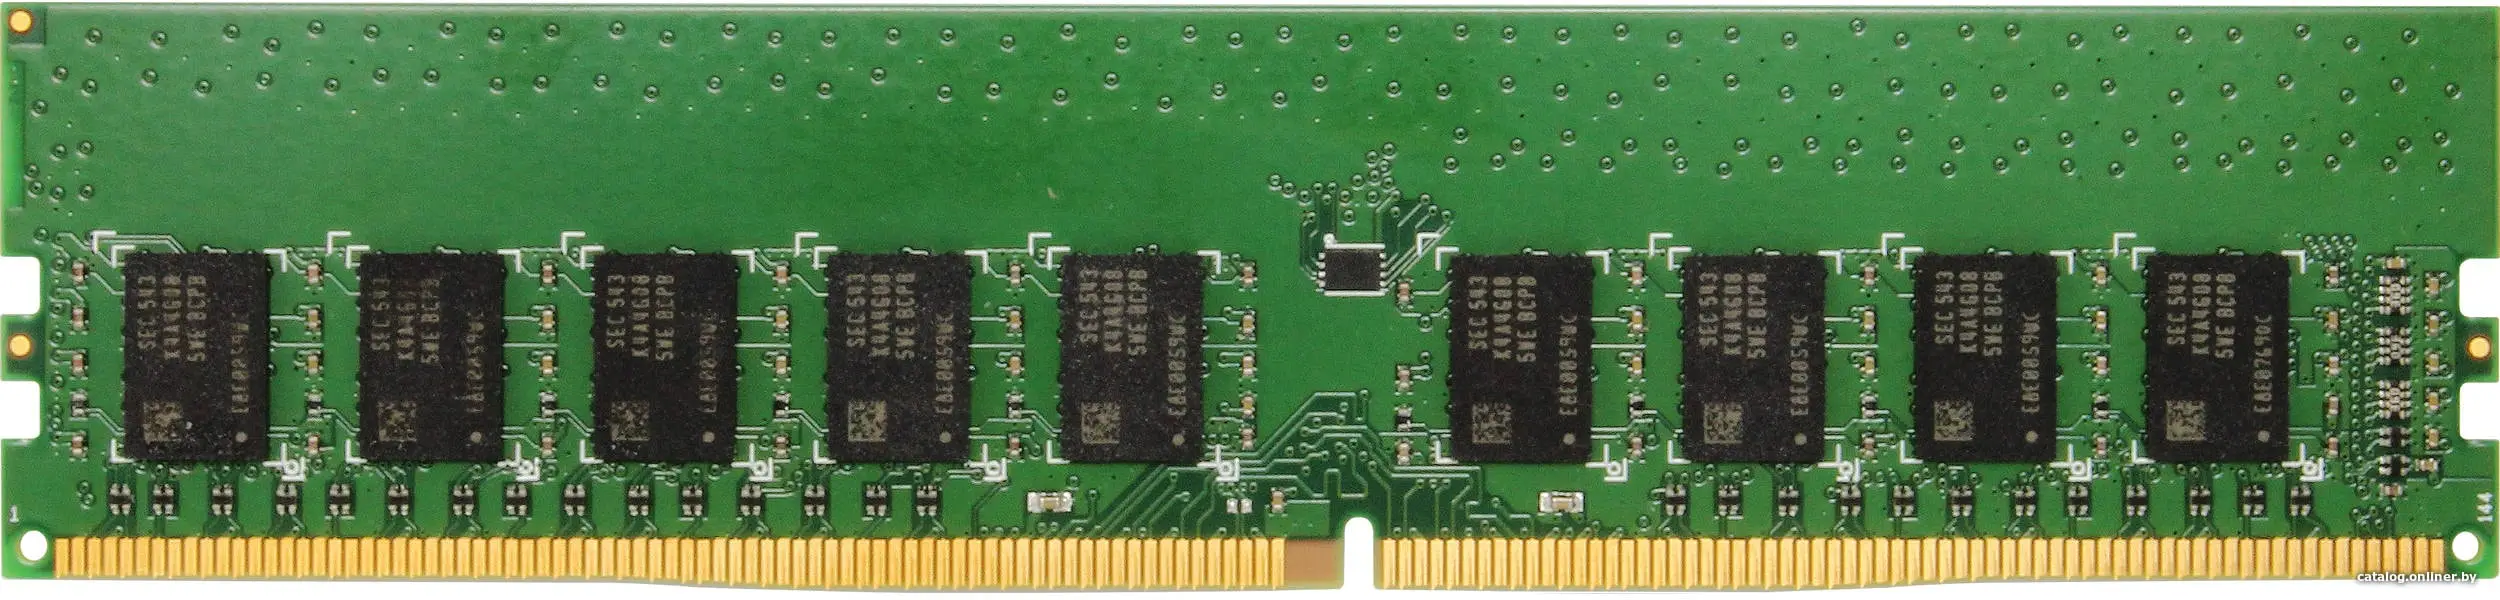 Купить Модуль памяти для СХД DDR4 16GB D4EC-2666-16G SYNOLOGY, цена, опт и розница